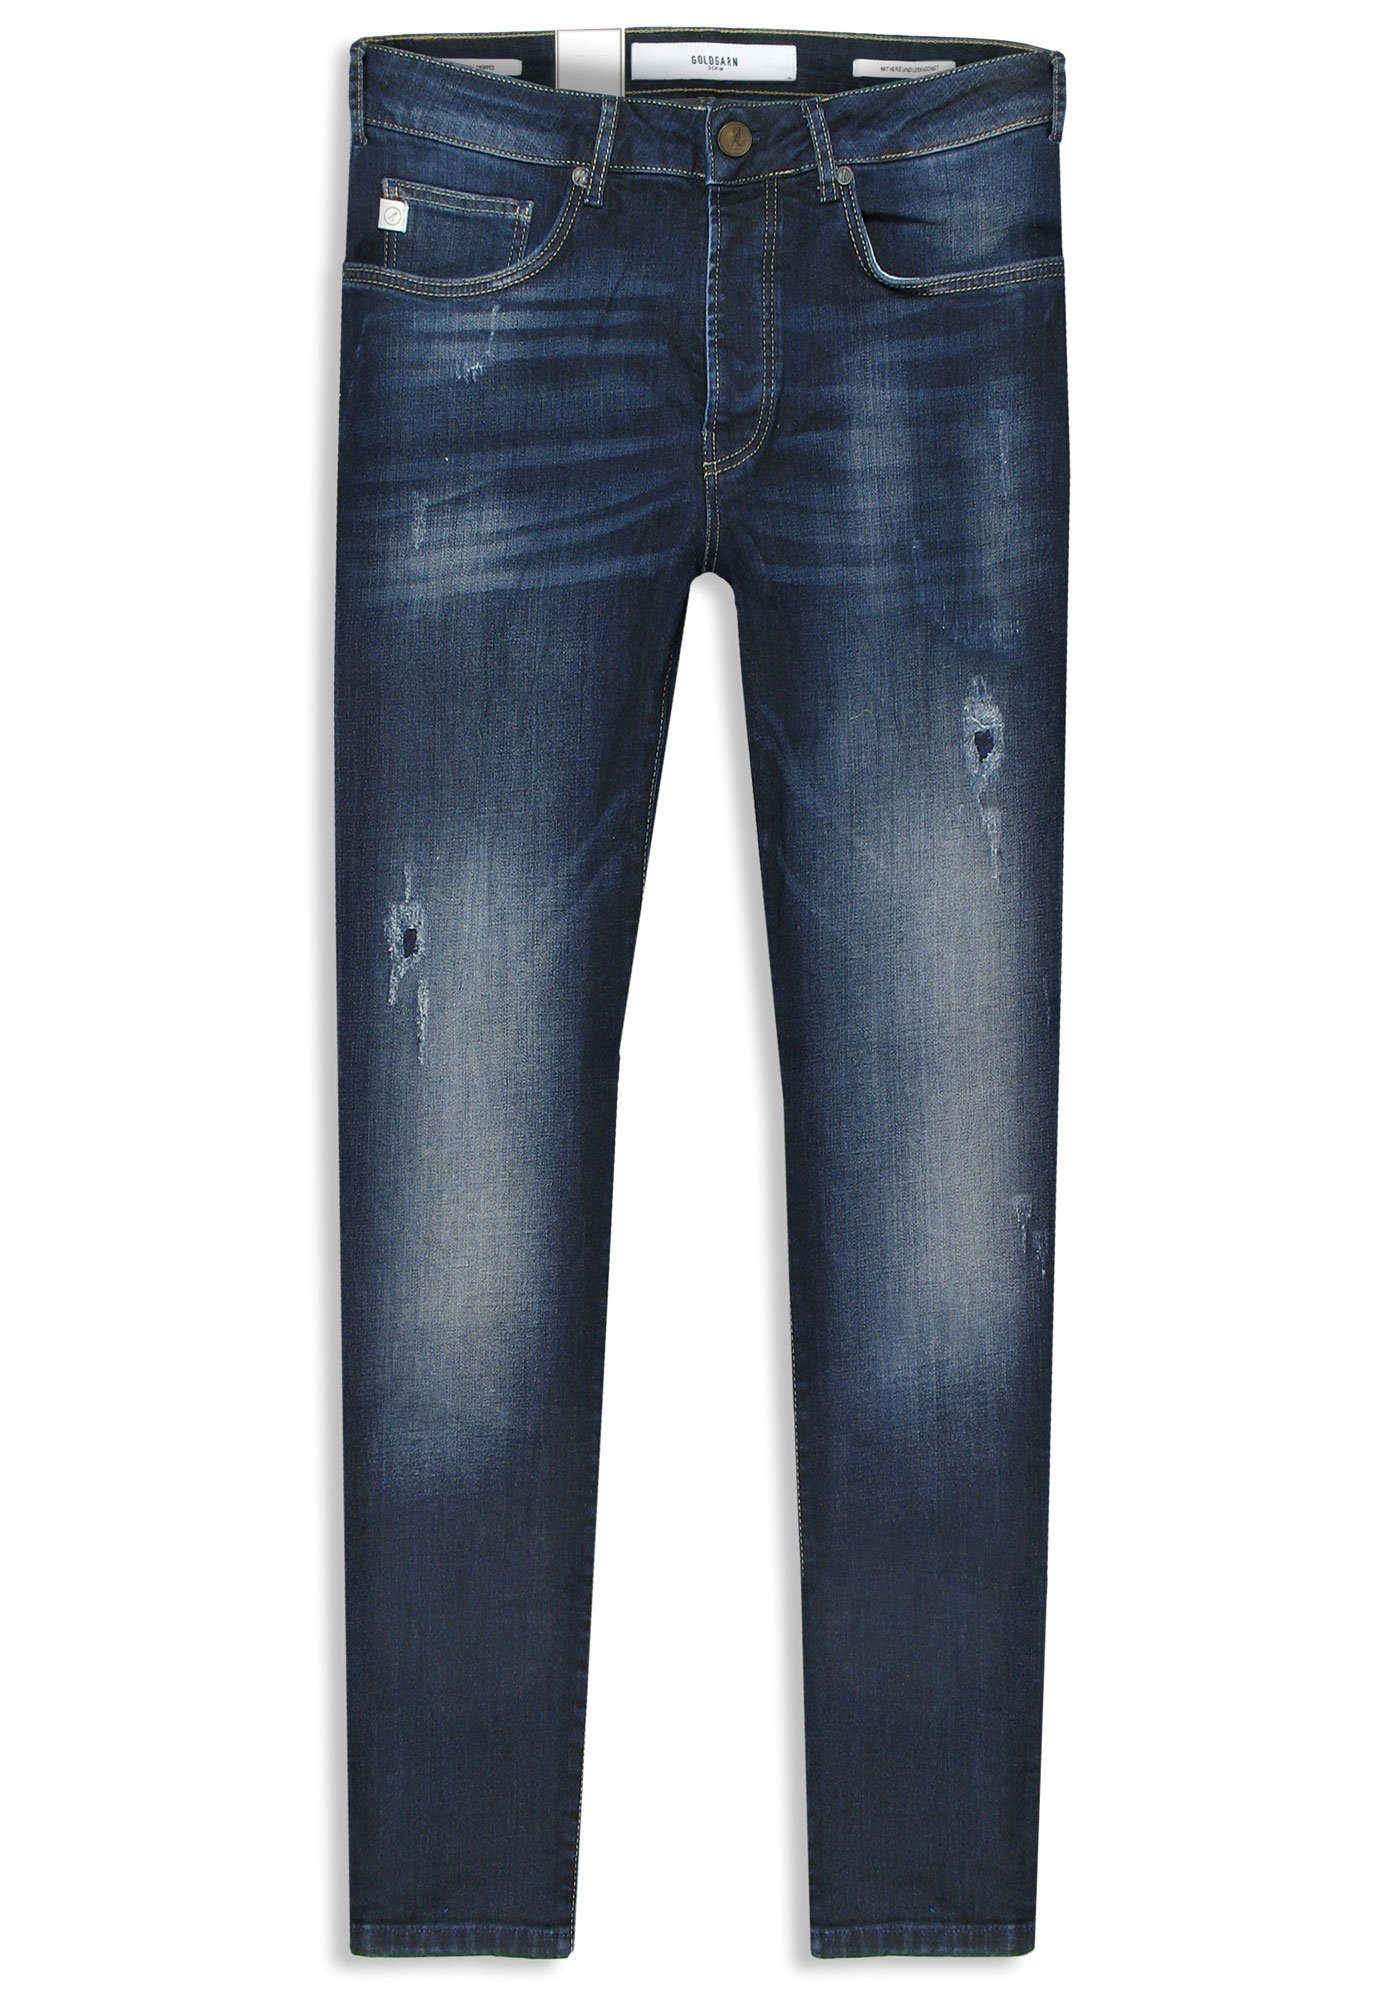 Goldgarn 5-Pocket-Jeans Herren U2 Slim Fit distressed Denim 1030 Darkblue